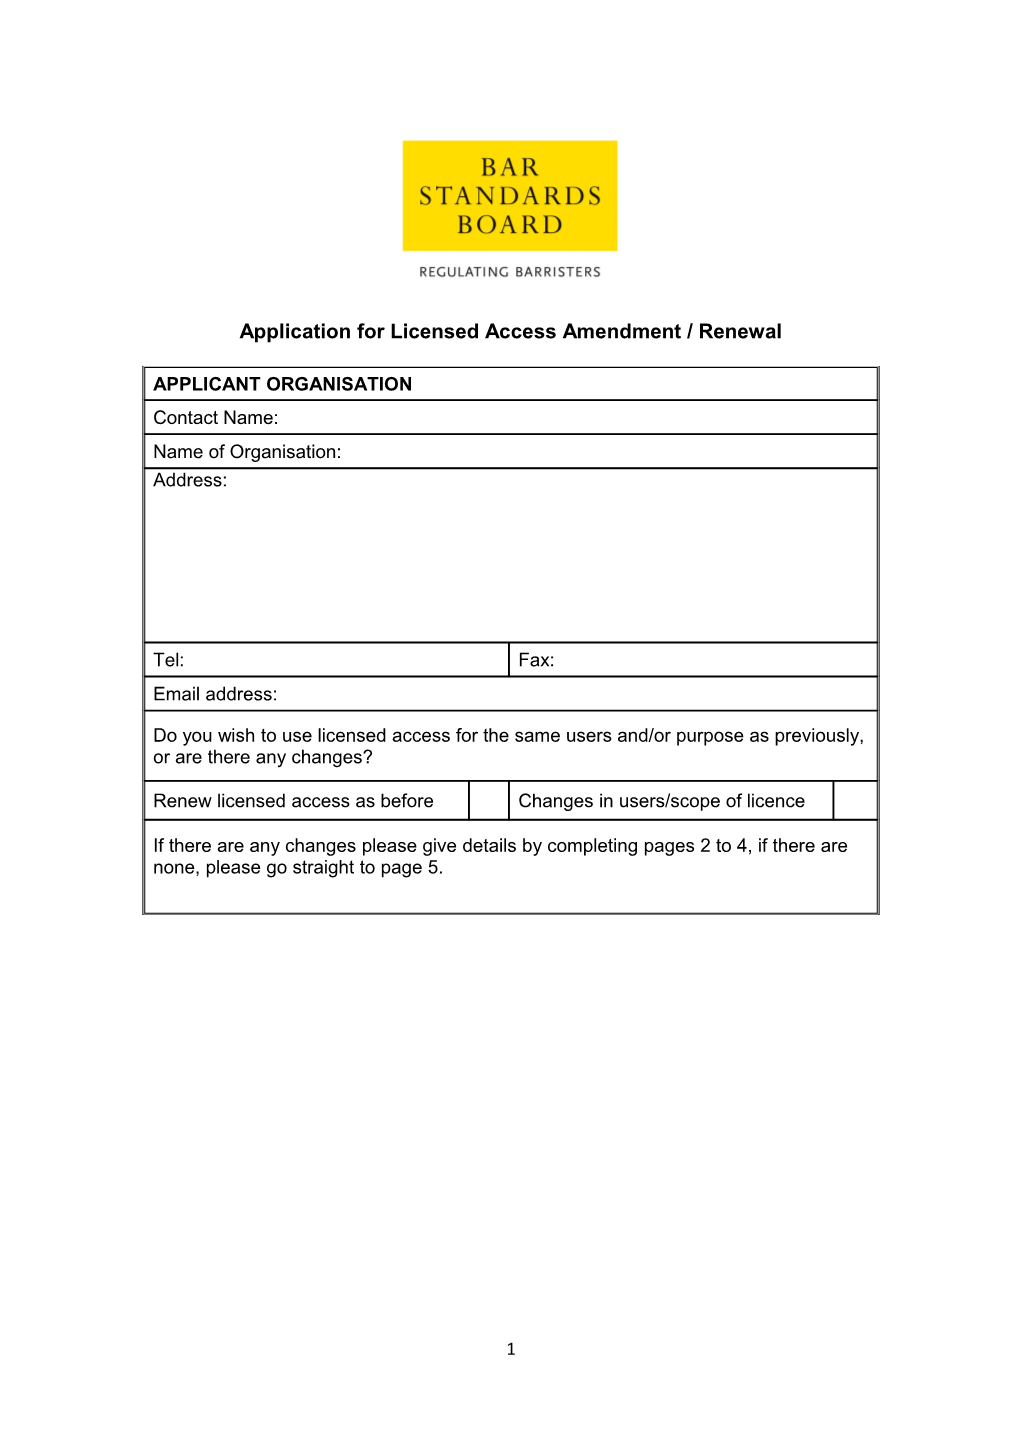 Application for Licensed Access Amendment / Renewal